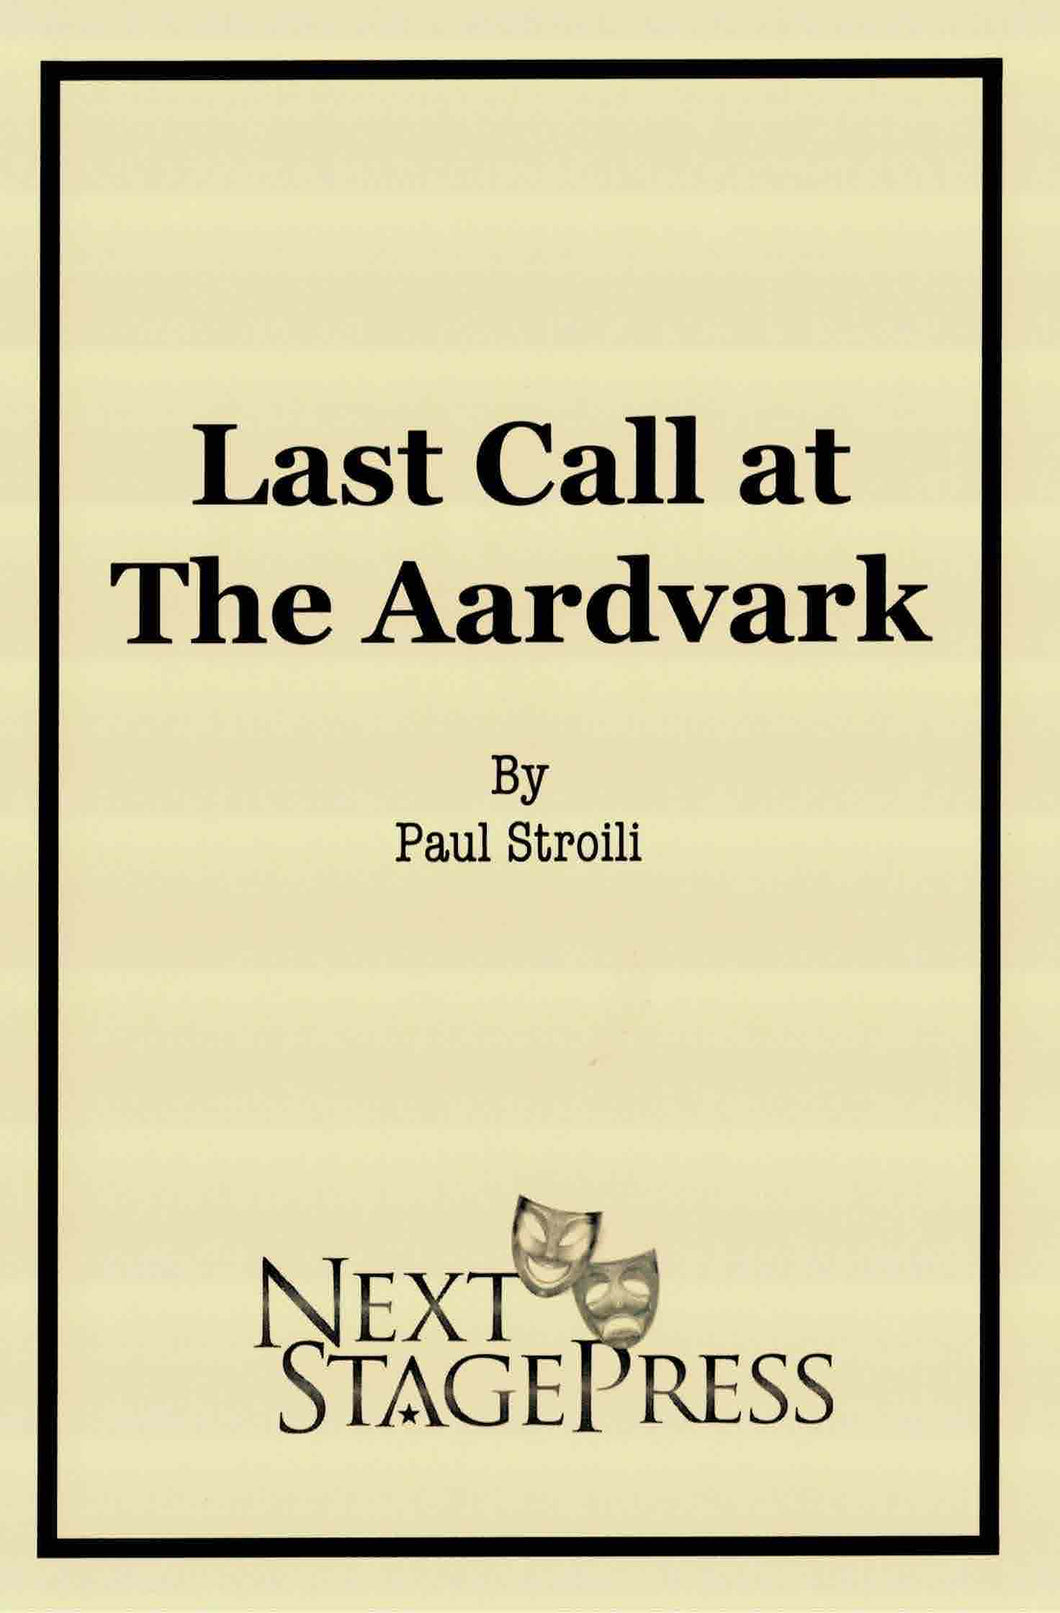 Last Call at The Aardvark by Paul Stroili